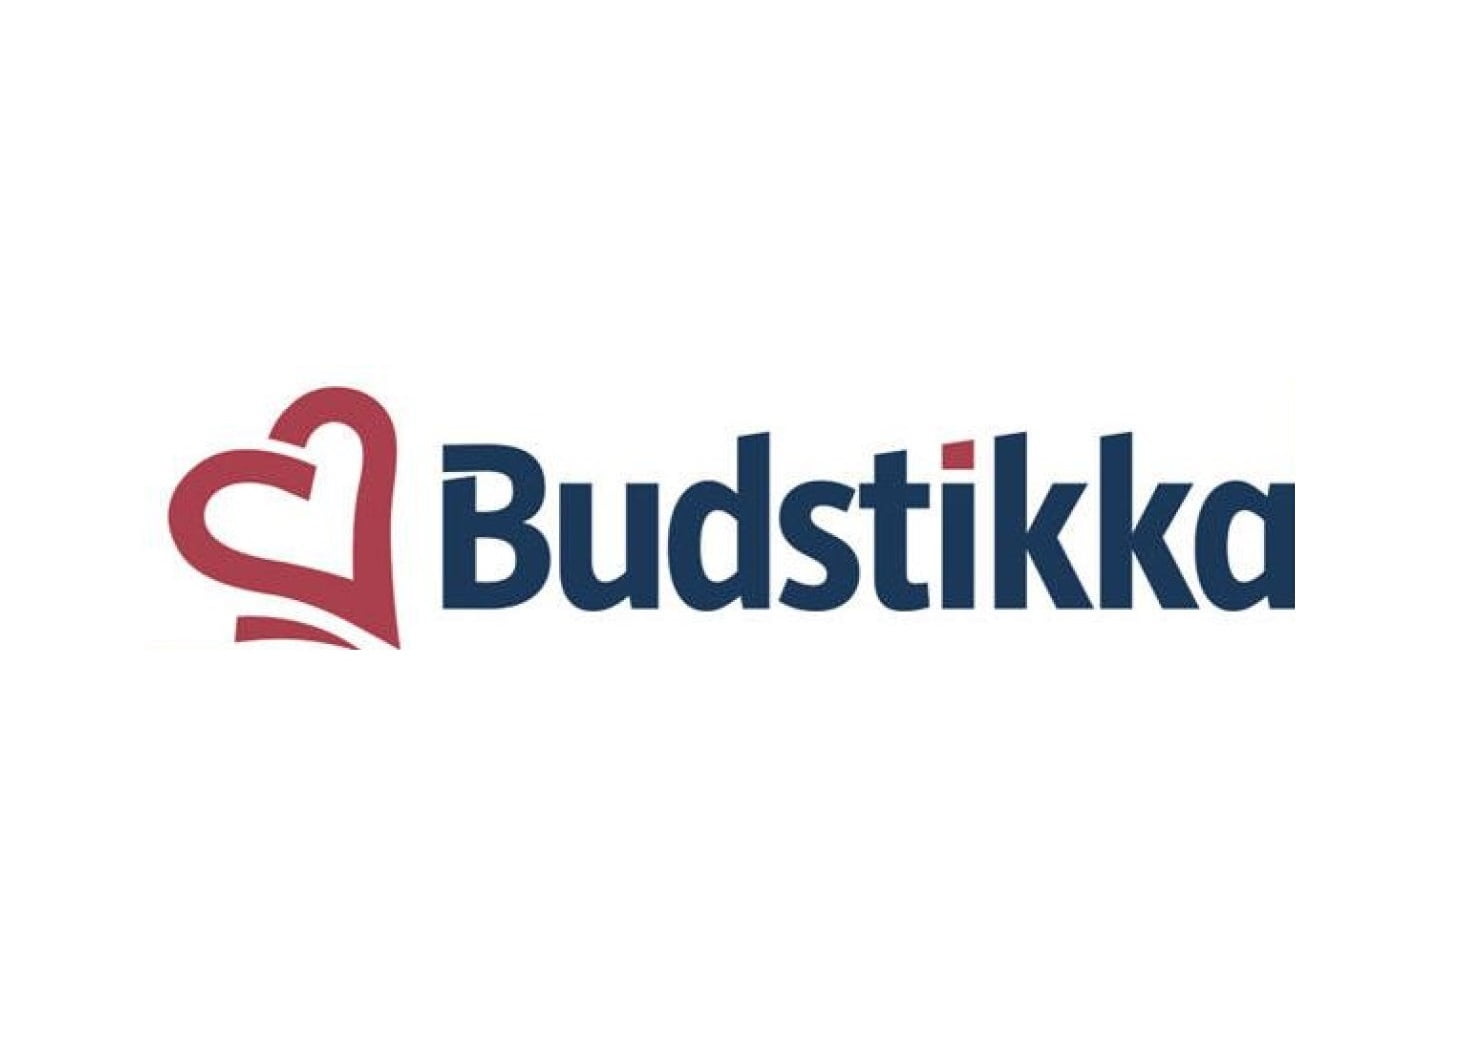 Budstikka logo